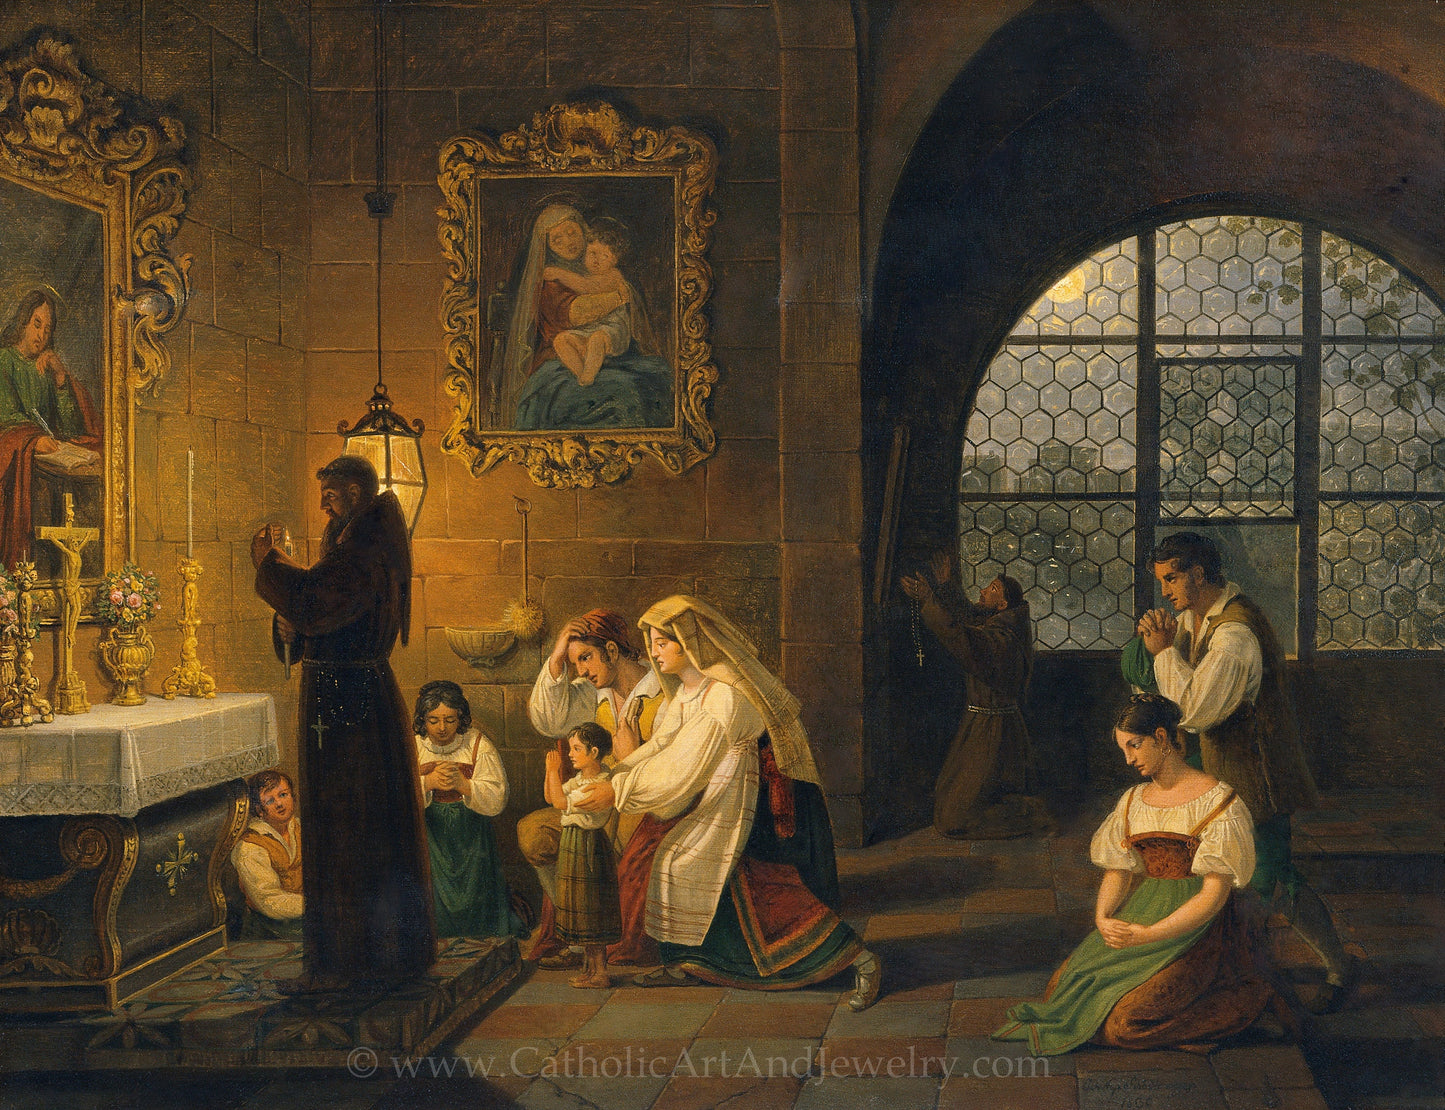 New! Praying in an Italian Church – "Das Innere einer italienische" – Johann Schödlberge – Beautiful Catholic Art – Catholic Gift –Archival